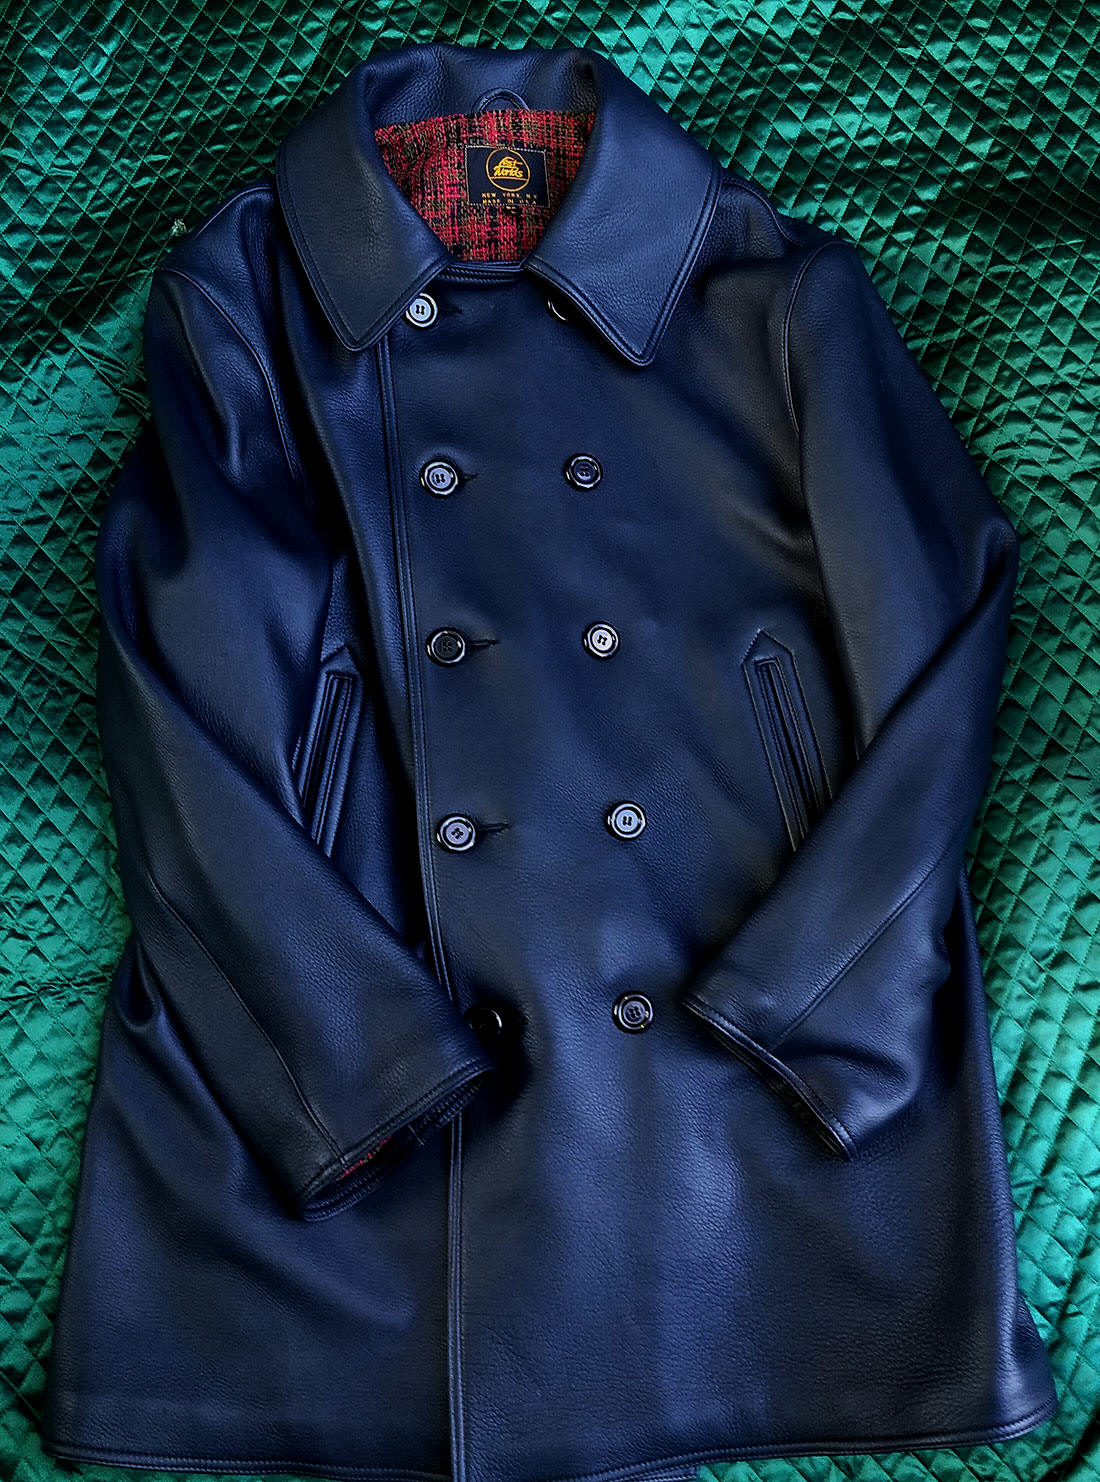 Navy Blue Deerskin Leather Pea Coat USA